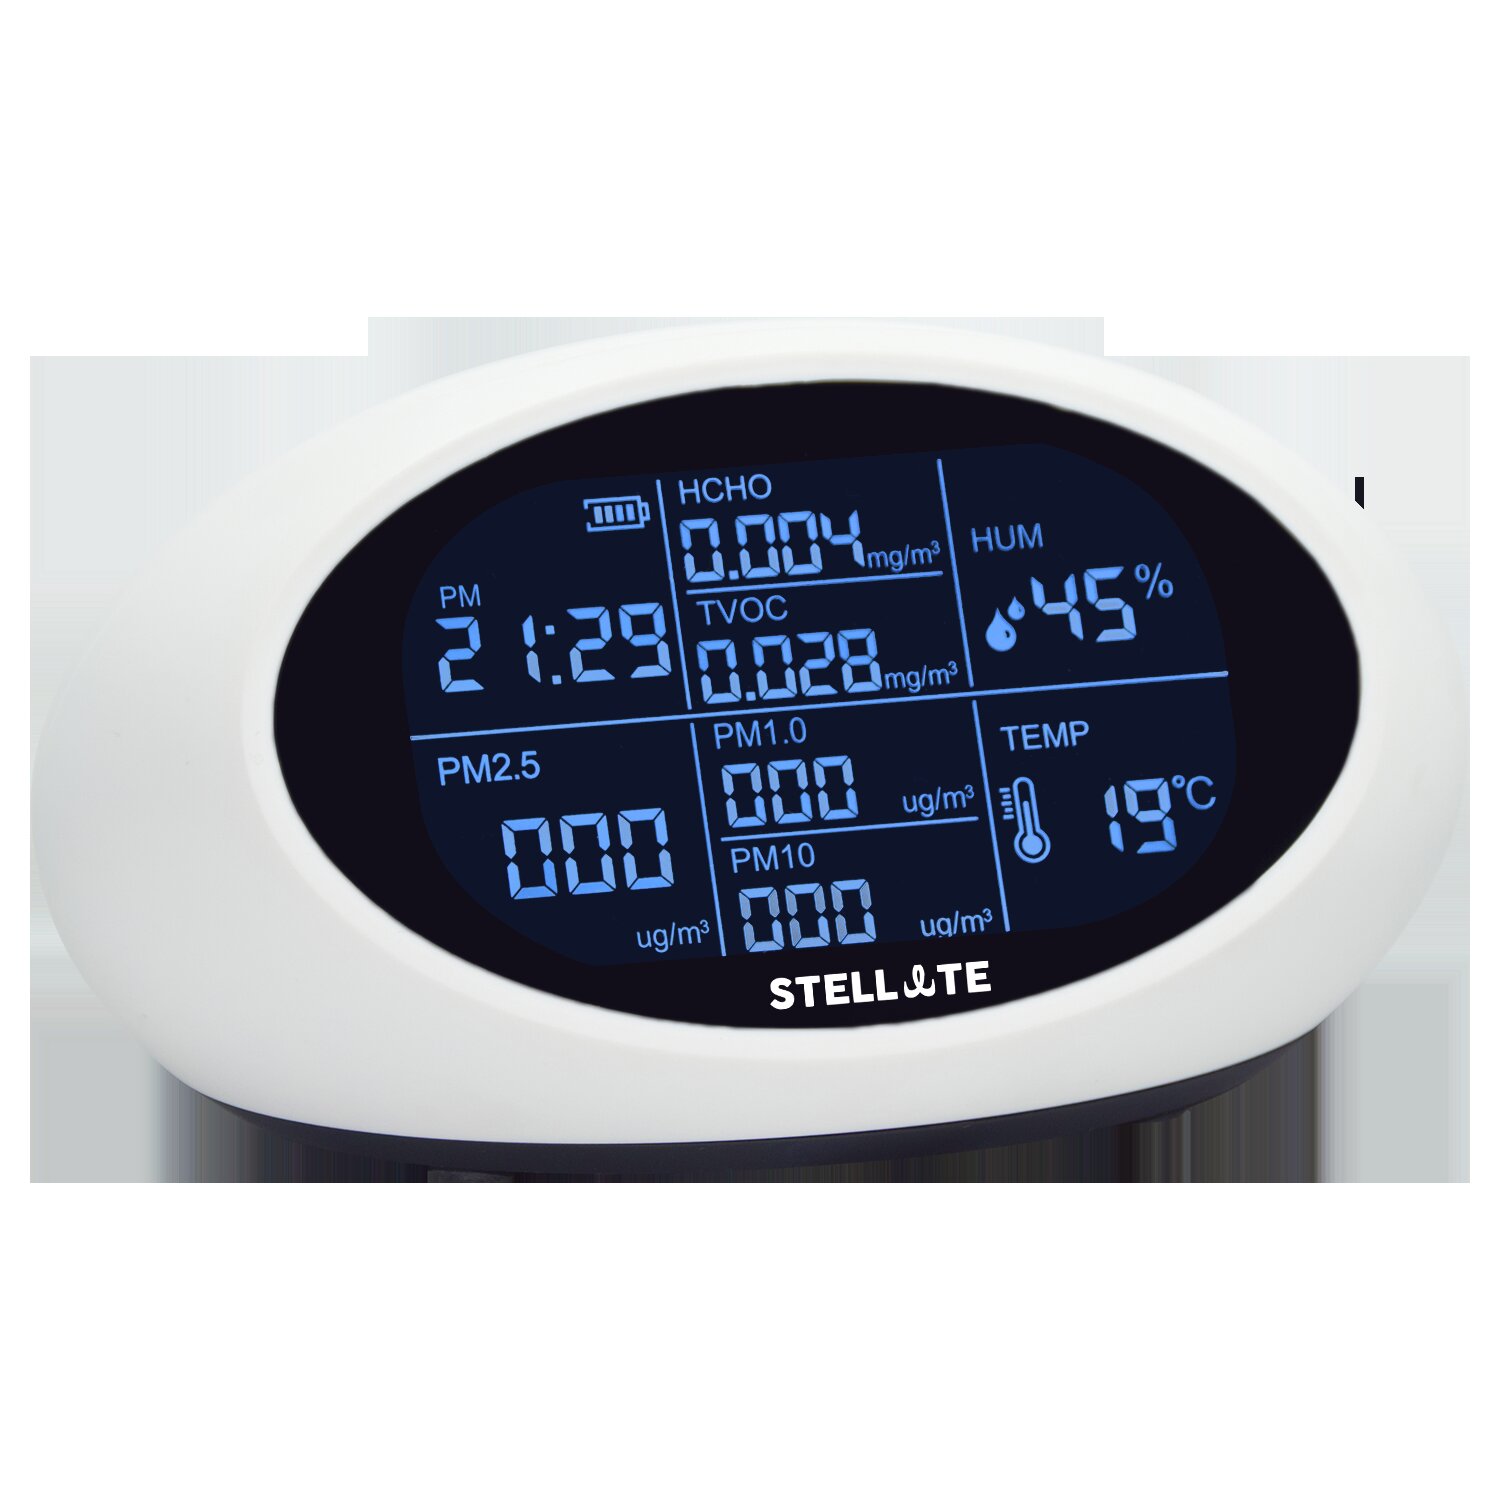 OhhGo Portable Formaldehyde Detector Indoor Home Air Quality Tester HCHO Meter TVOC Monitor